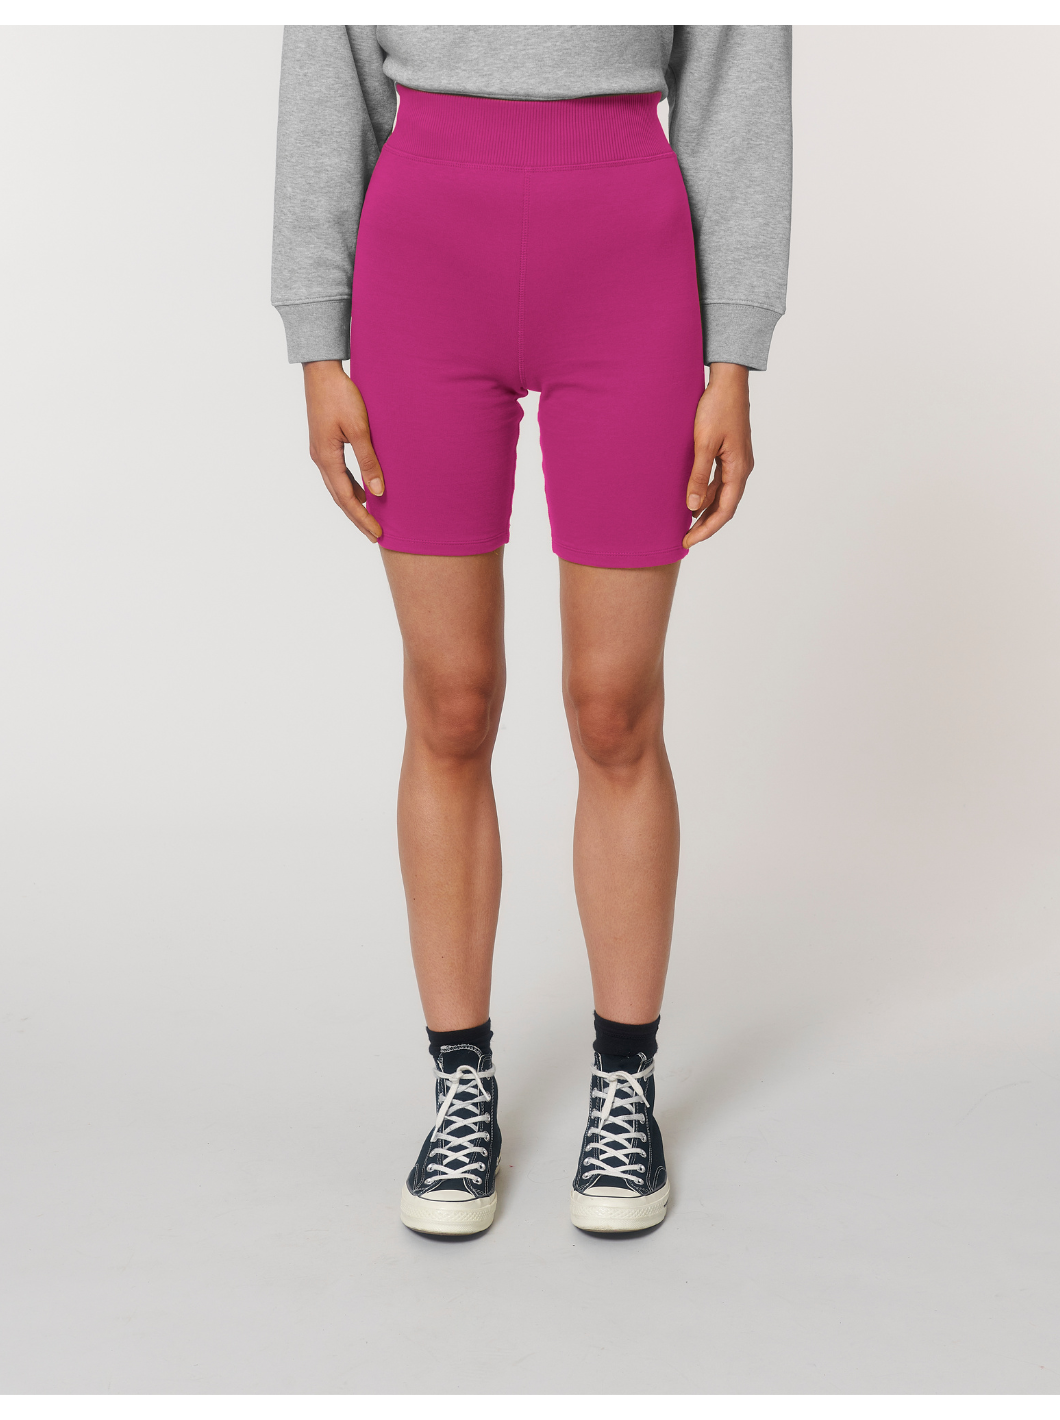 Women's shorts Terry pink